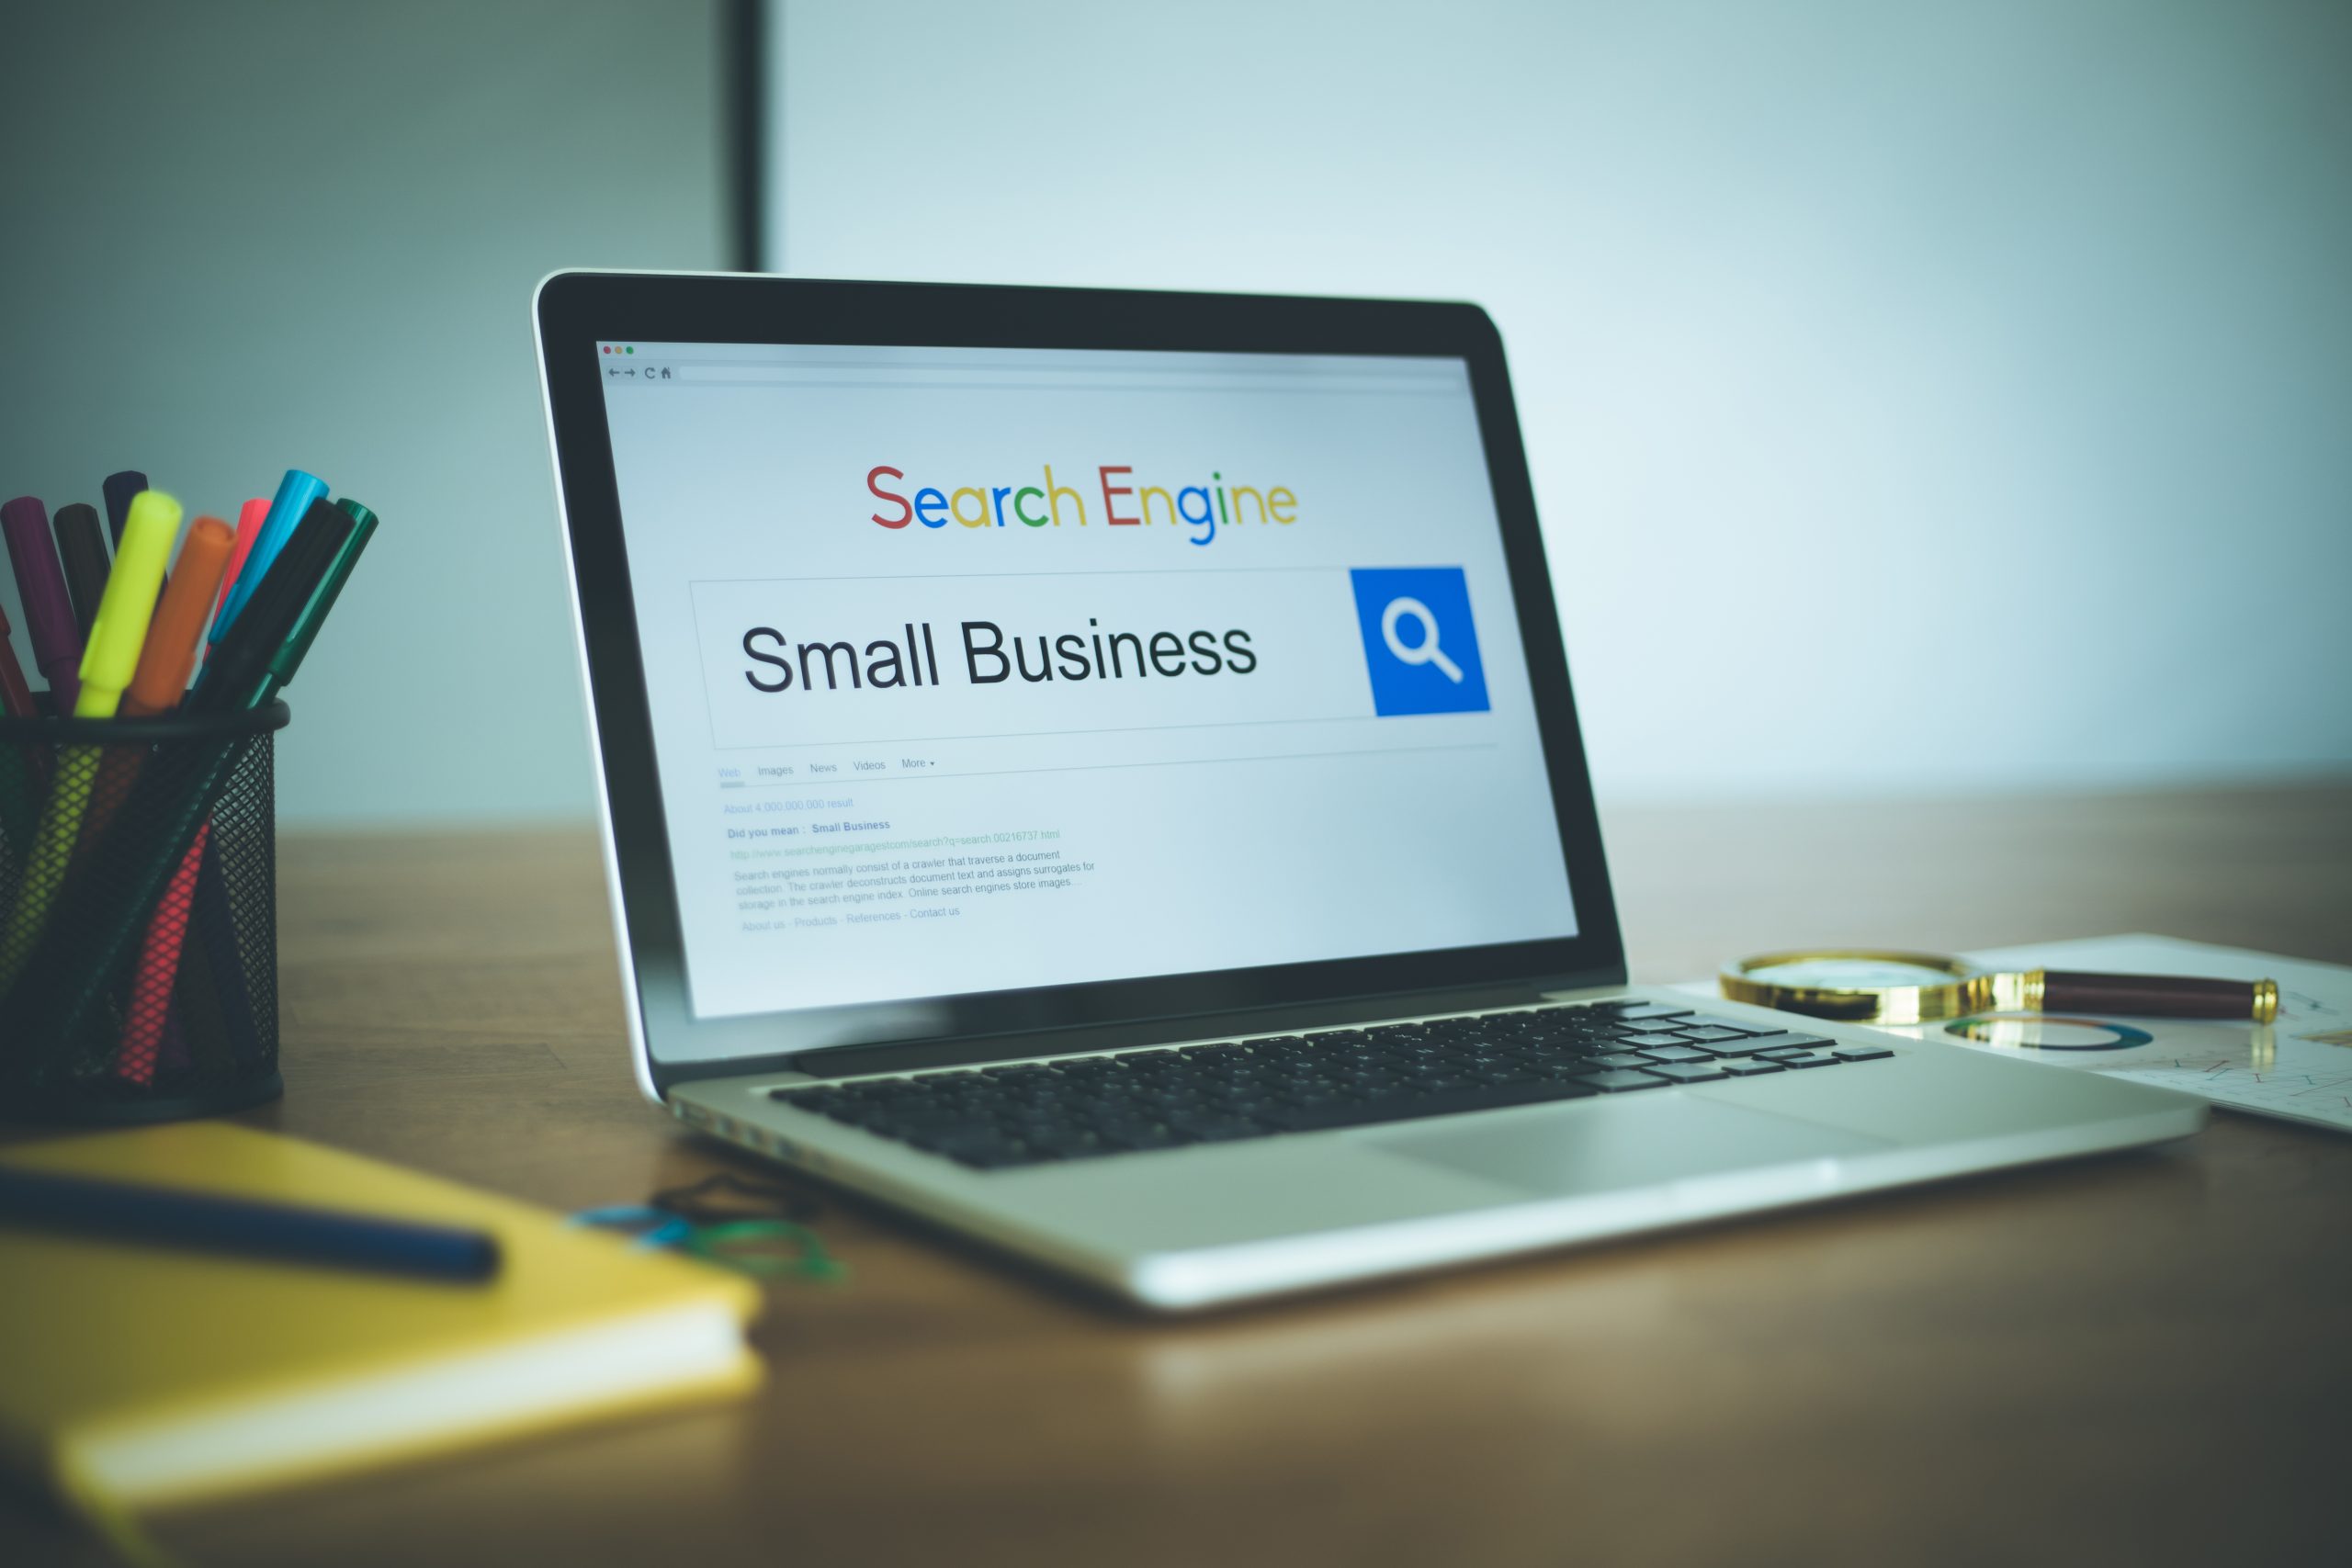 small business seo company